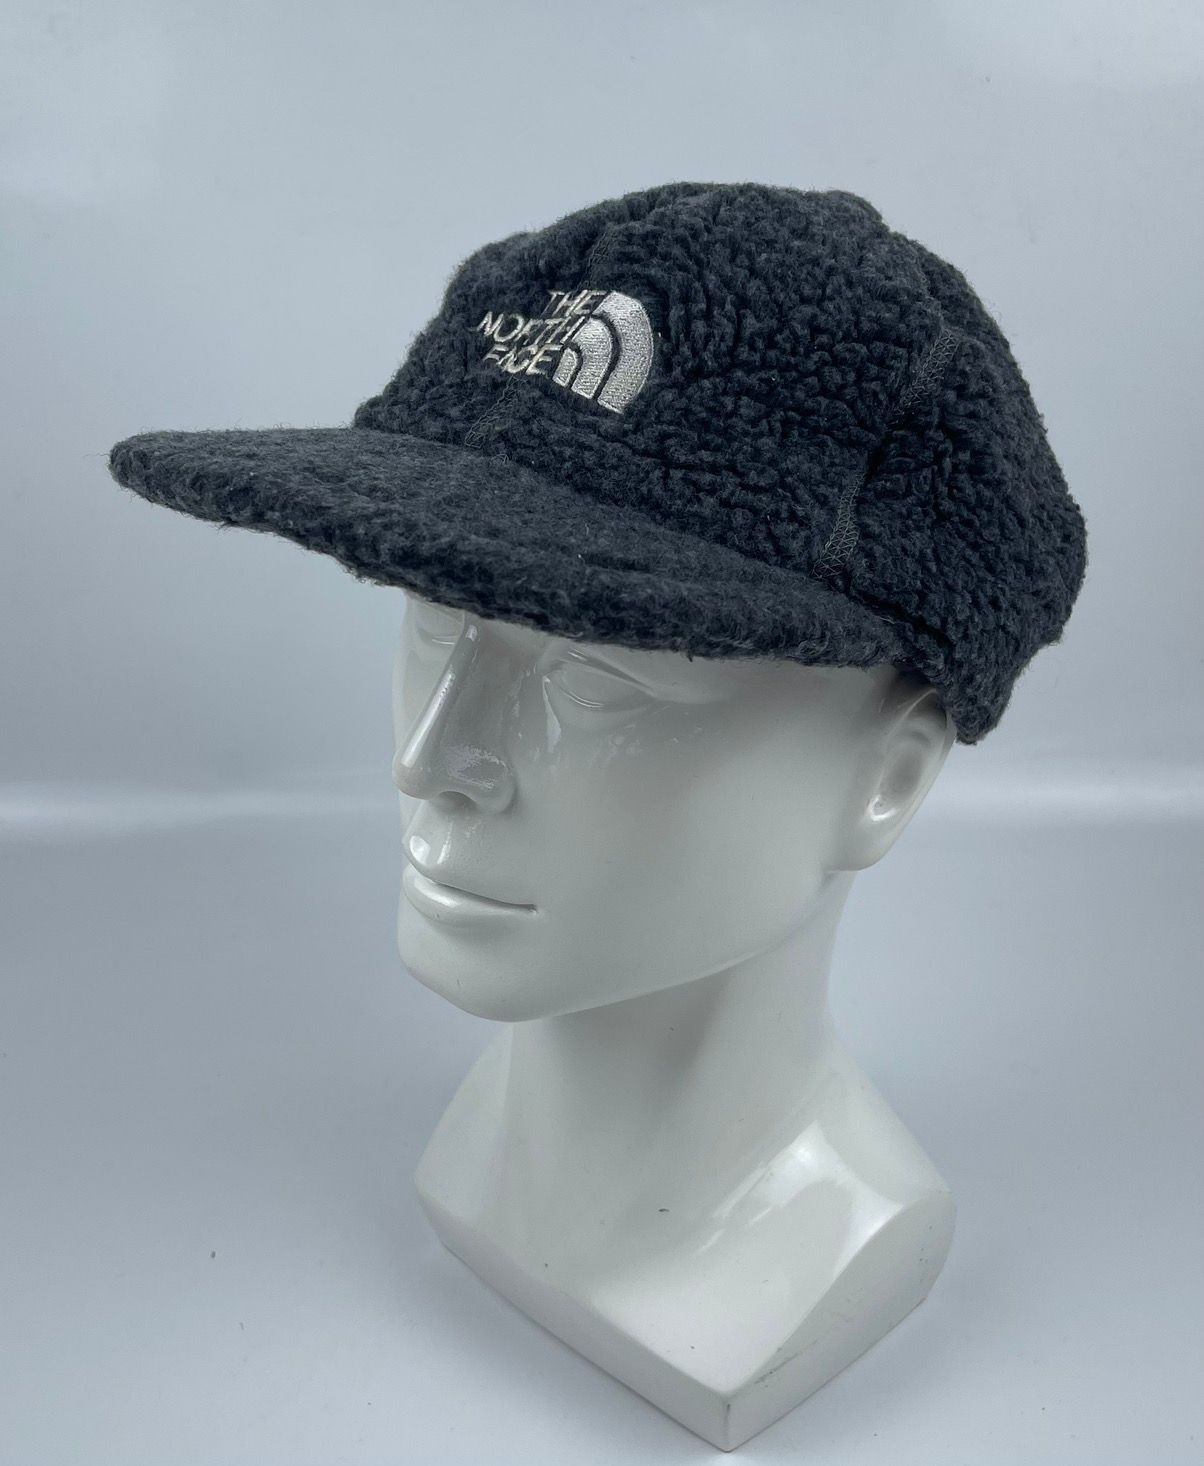 the north face hat cap - 1